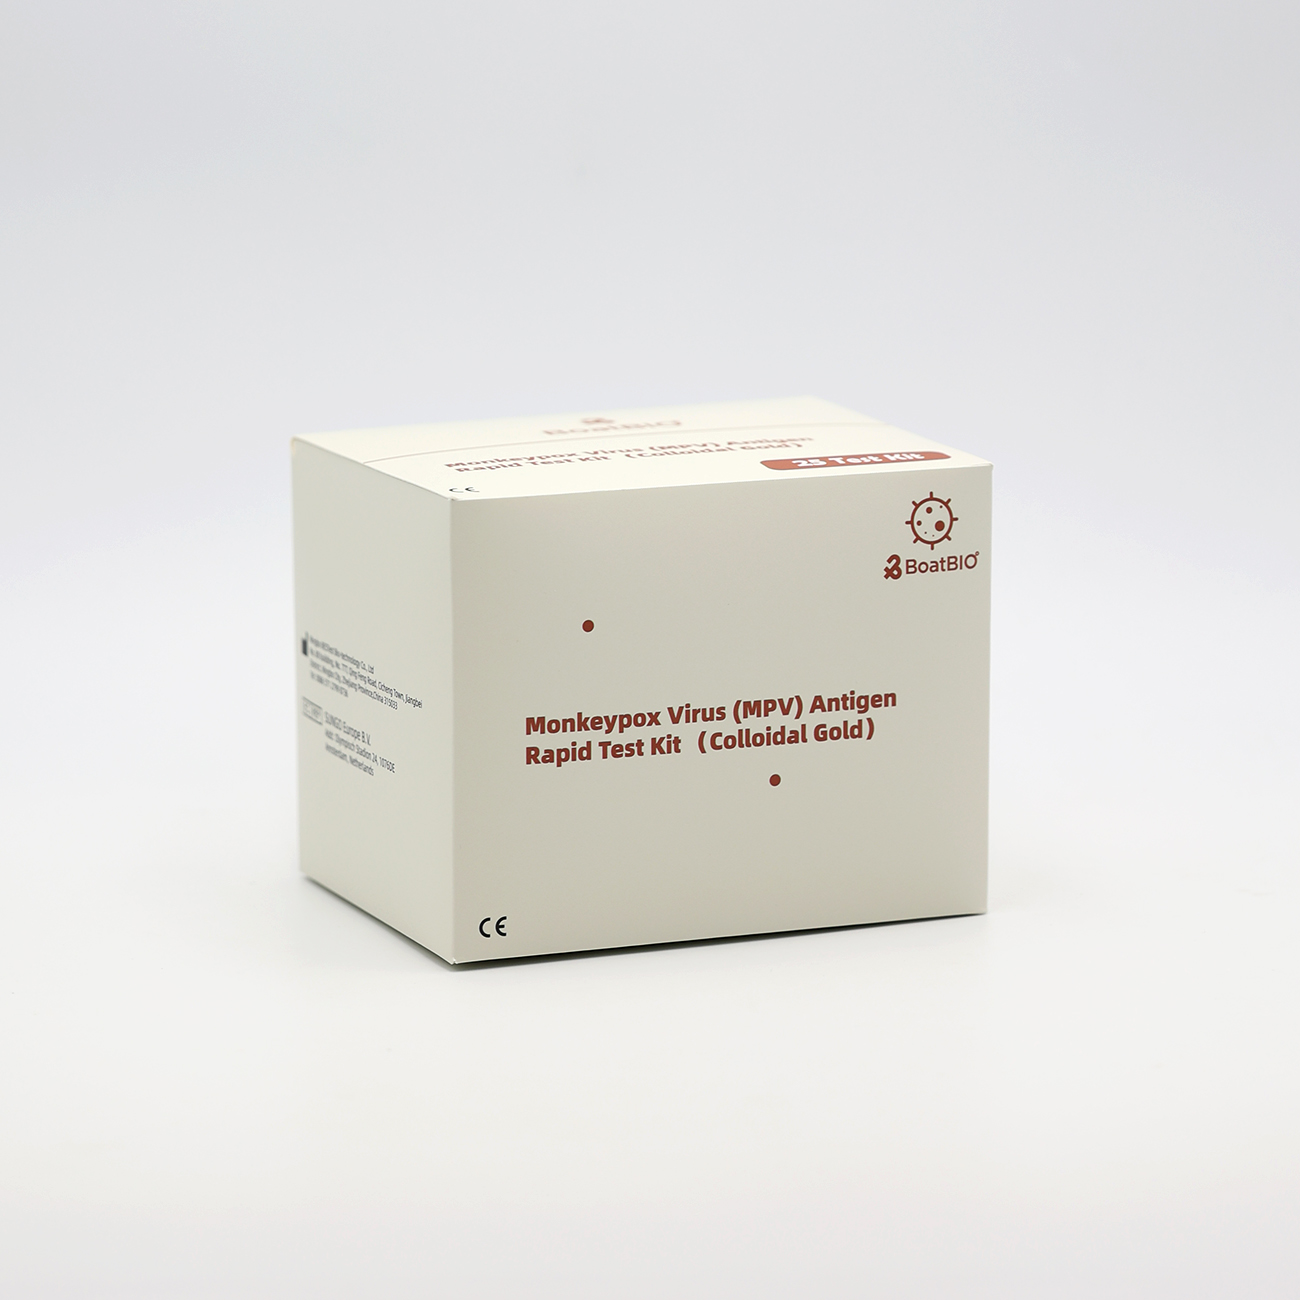 Monkeypox Virus (MPV) Antigen Rapid Test Kit (Colloidal Gold)